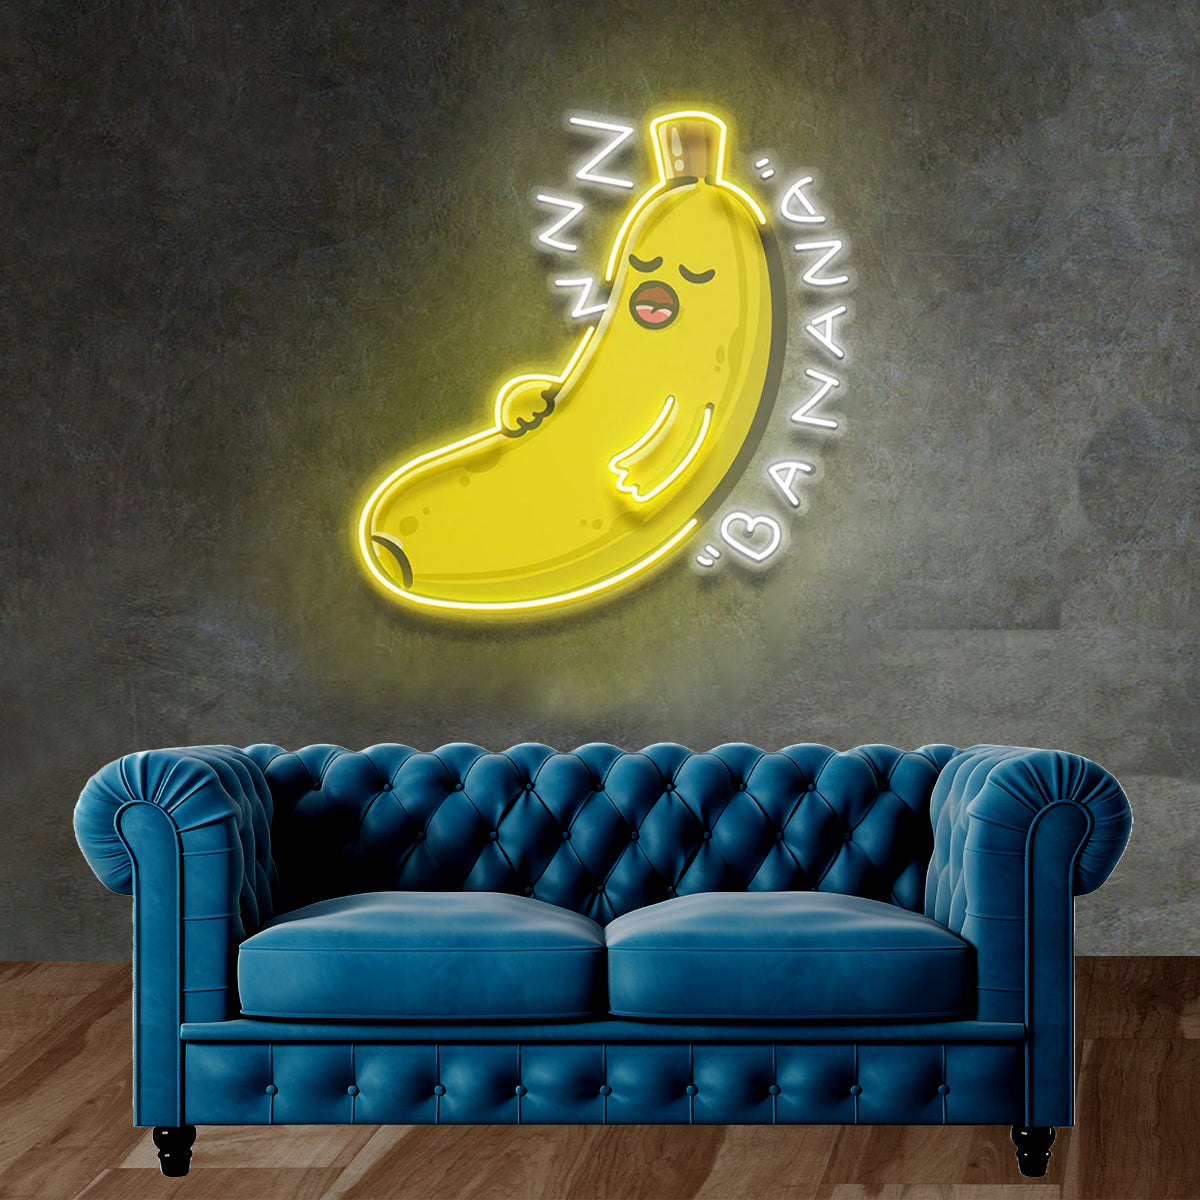 Banana Sleep Led Neon Light